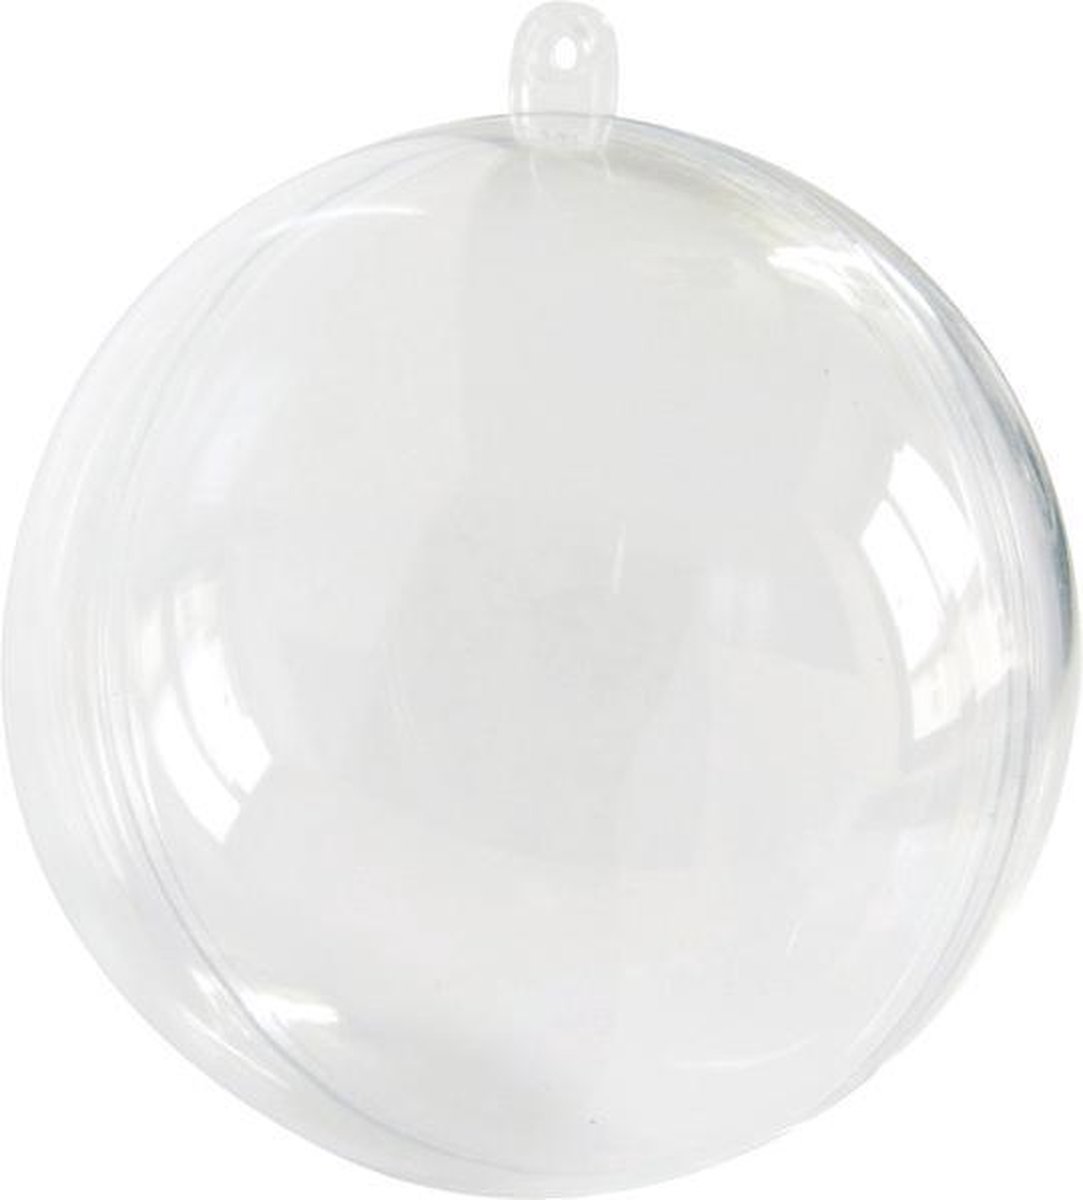 Goed gevoel pond Gasvormig Transparante bal 5 cm, 2 delig 2969, 5 stuks | bol.com